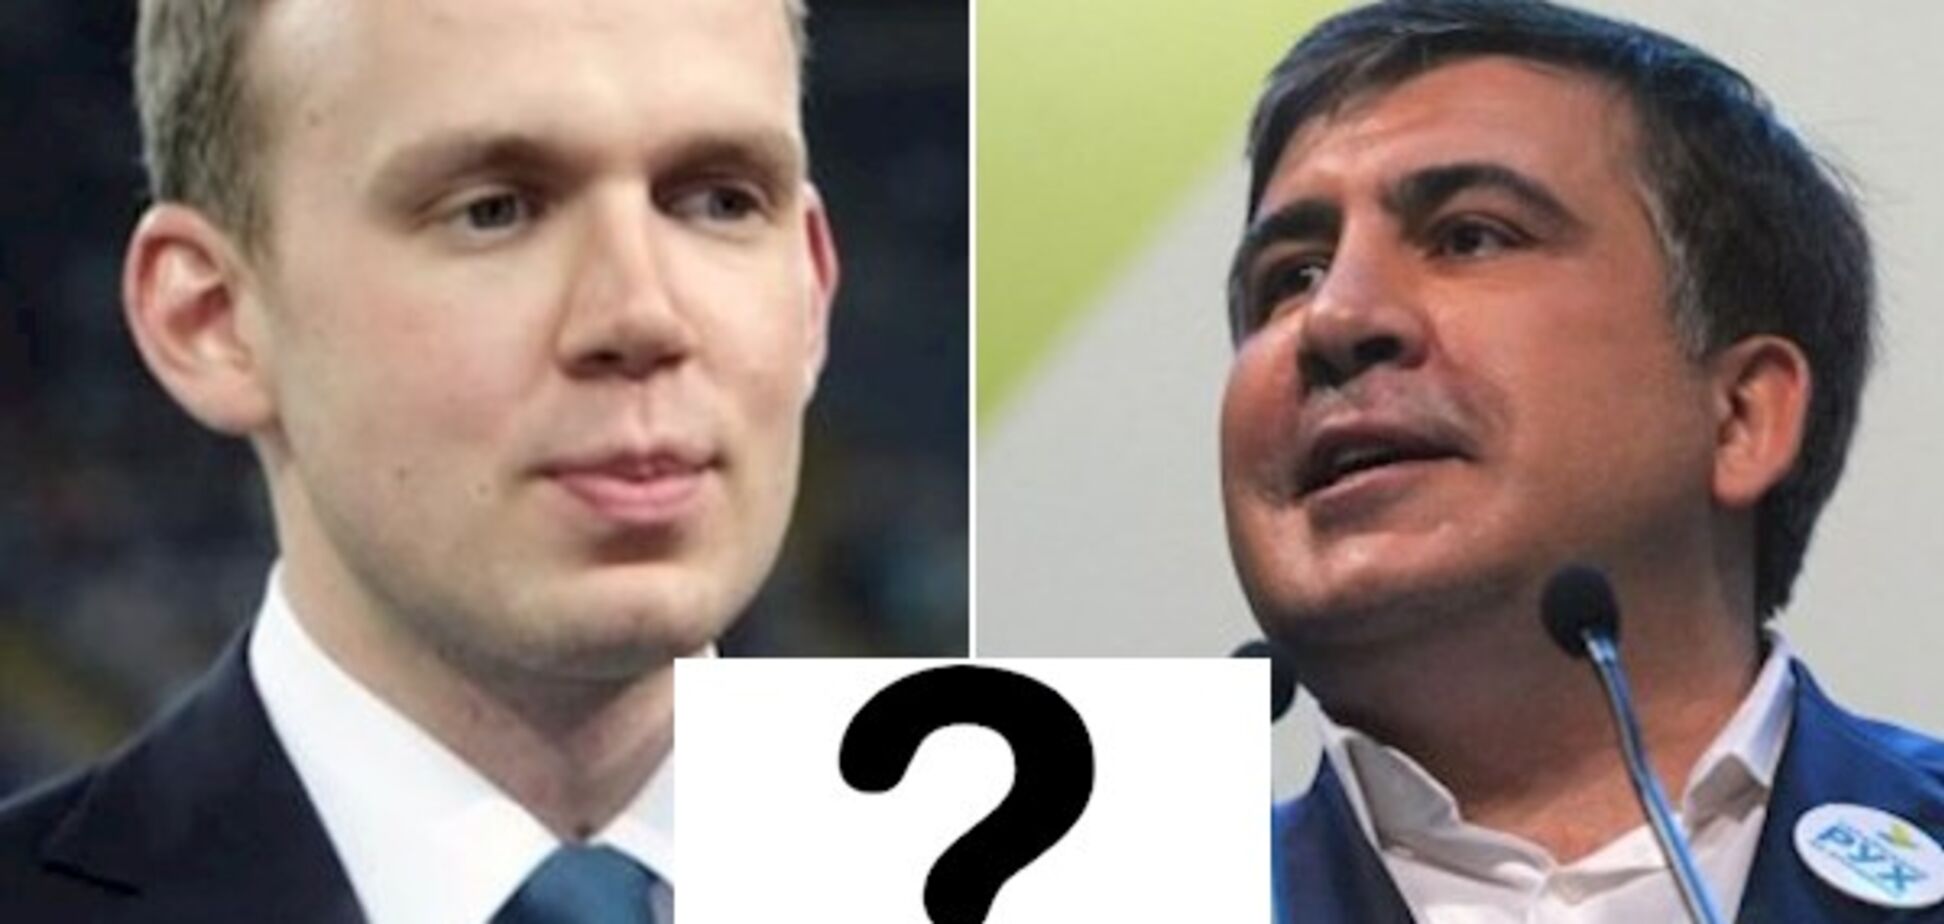 Посредник между Курченко и Саакашвили: что о нем известно